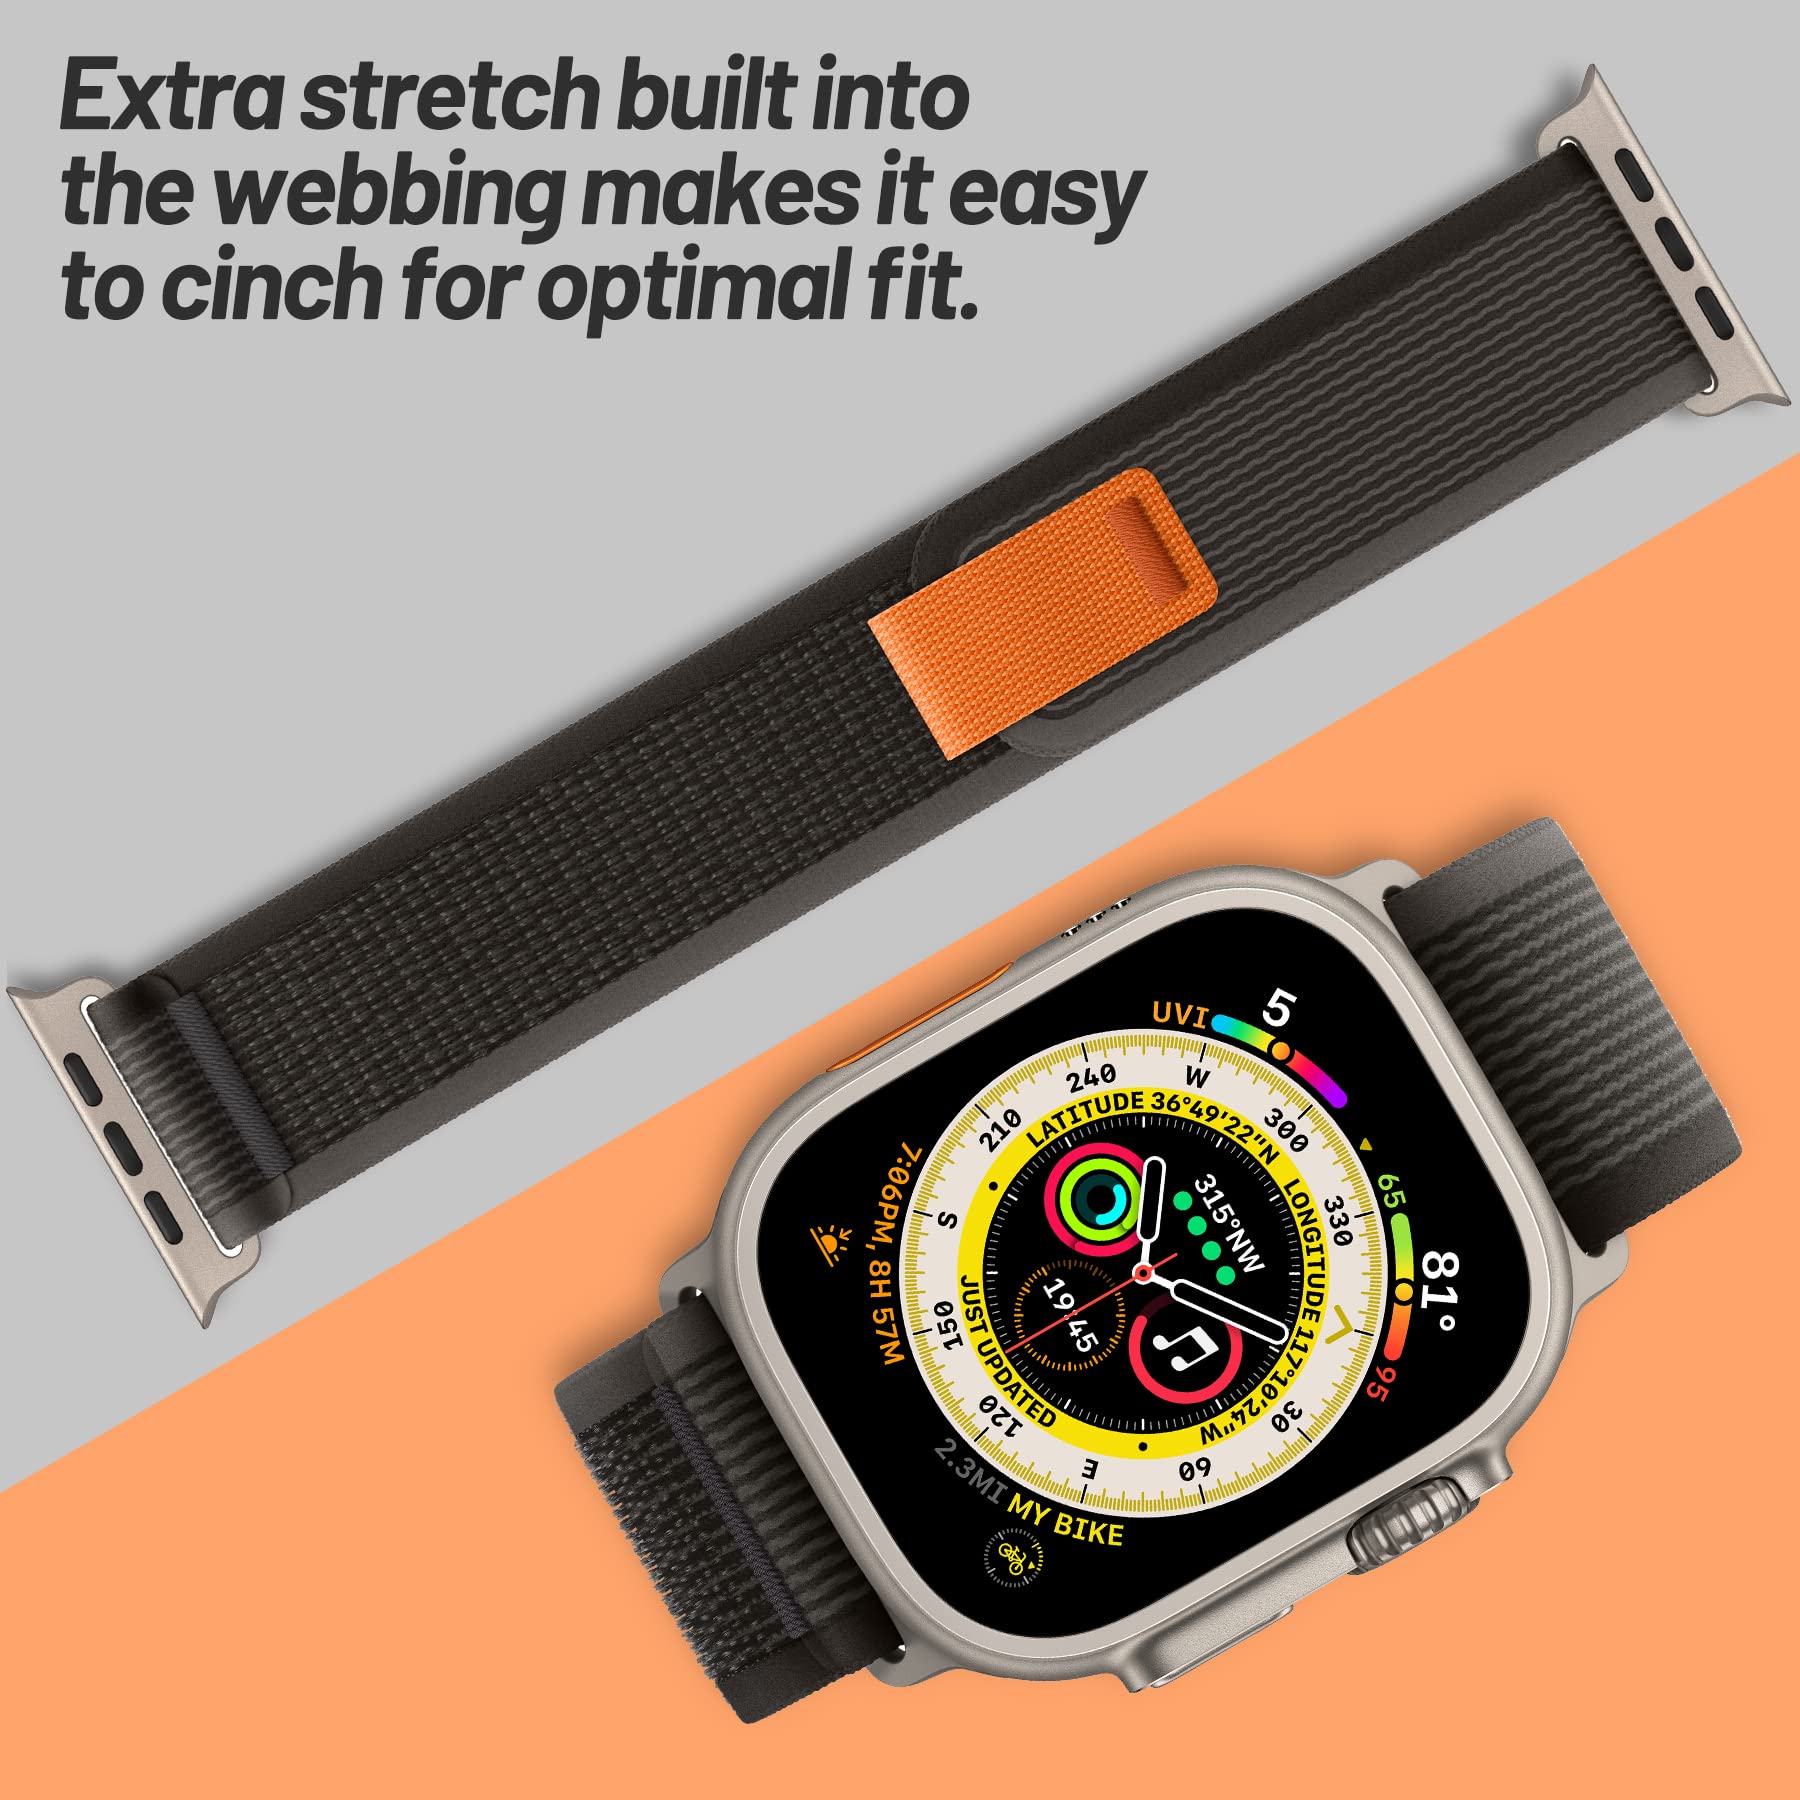 Apple Watch Ultra 49mm / 45mm / 44mm / 42mm | Trail Loop Watch Band Strap | Black/Grey